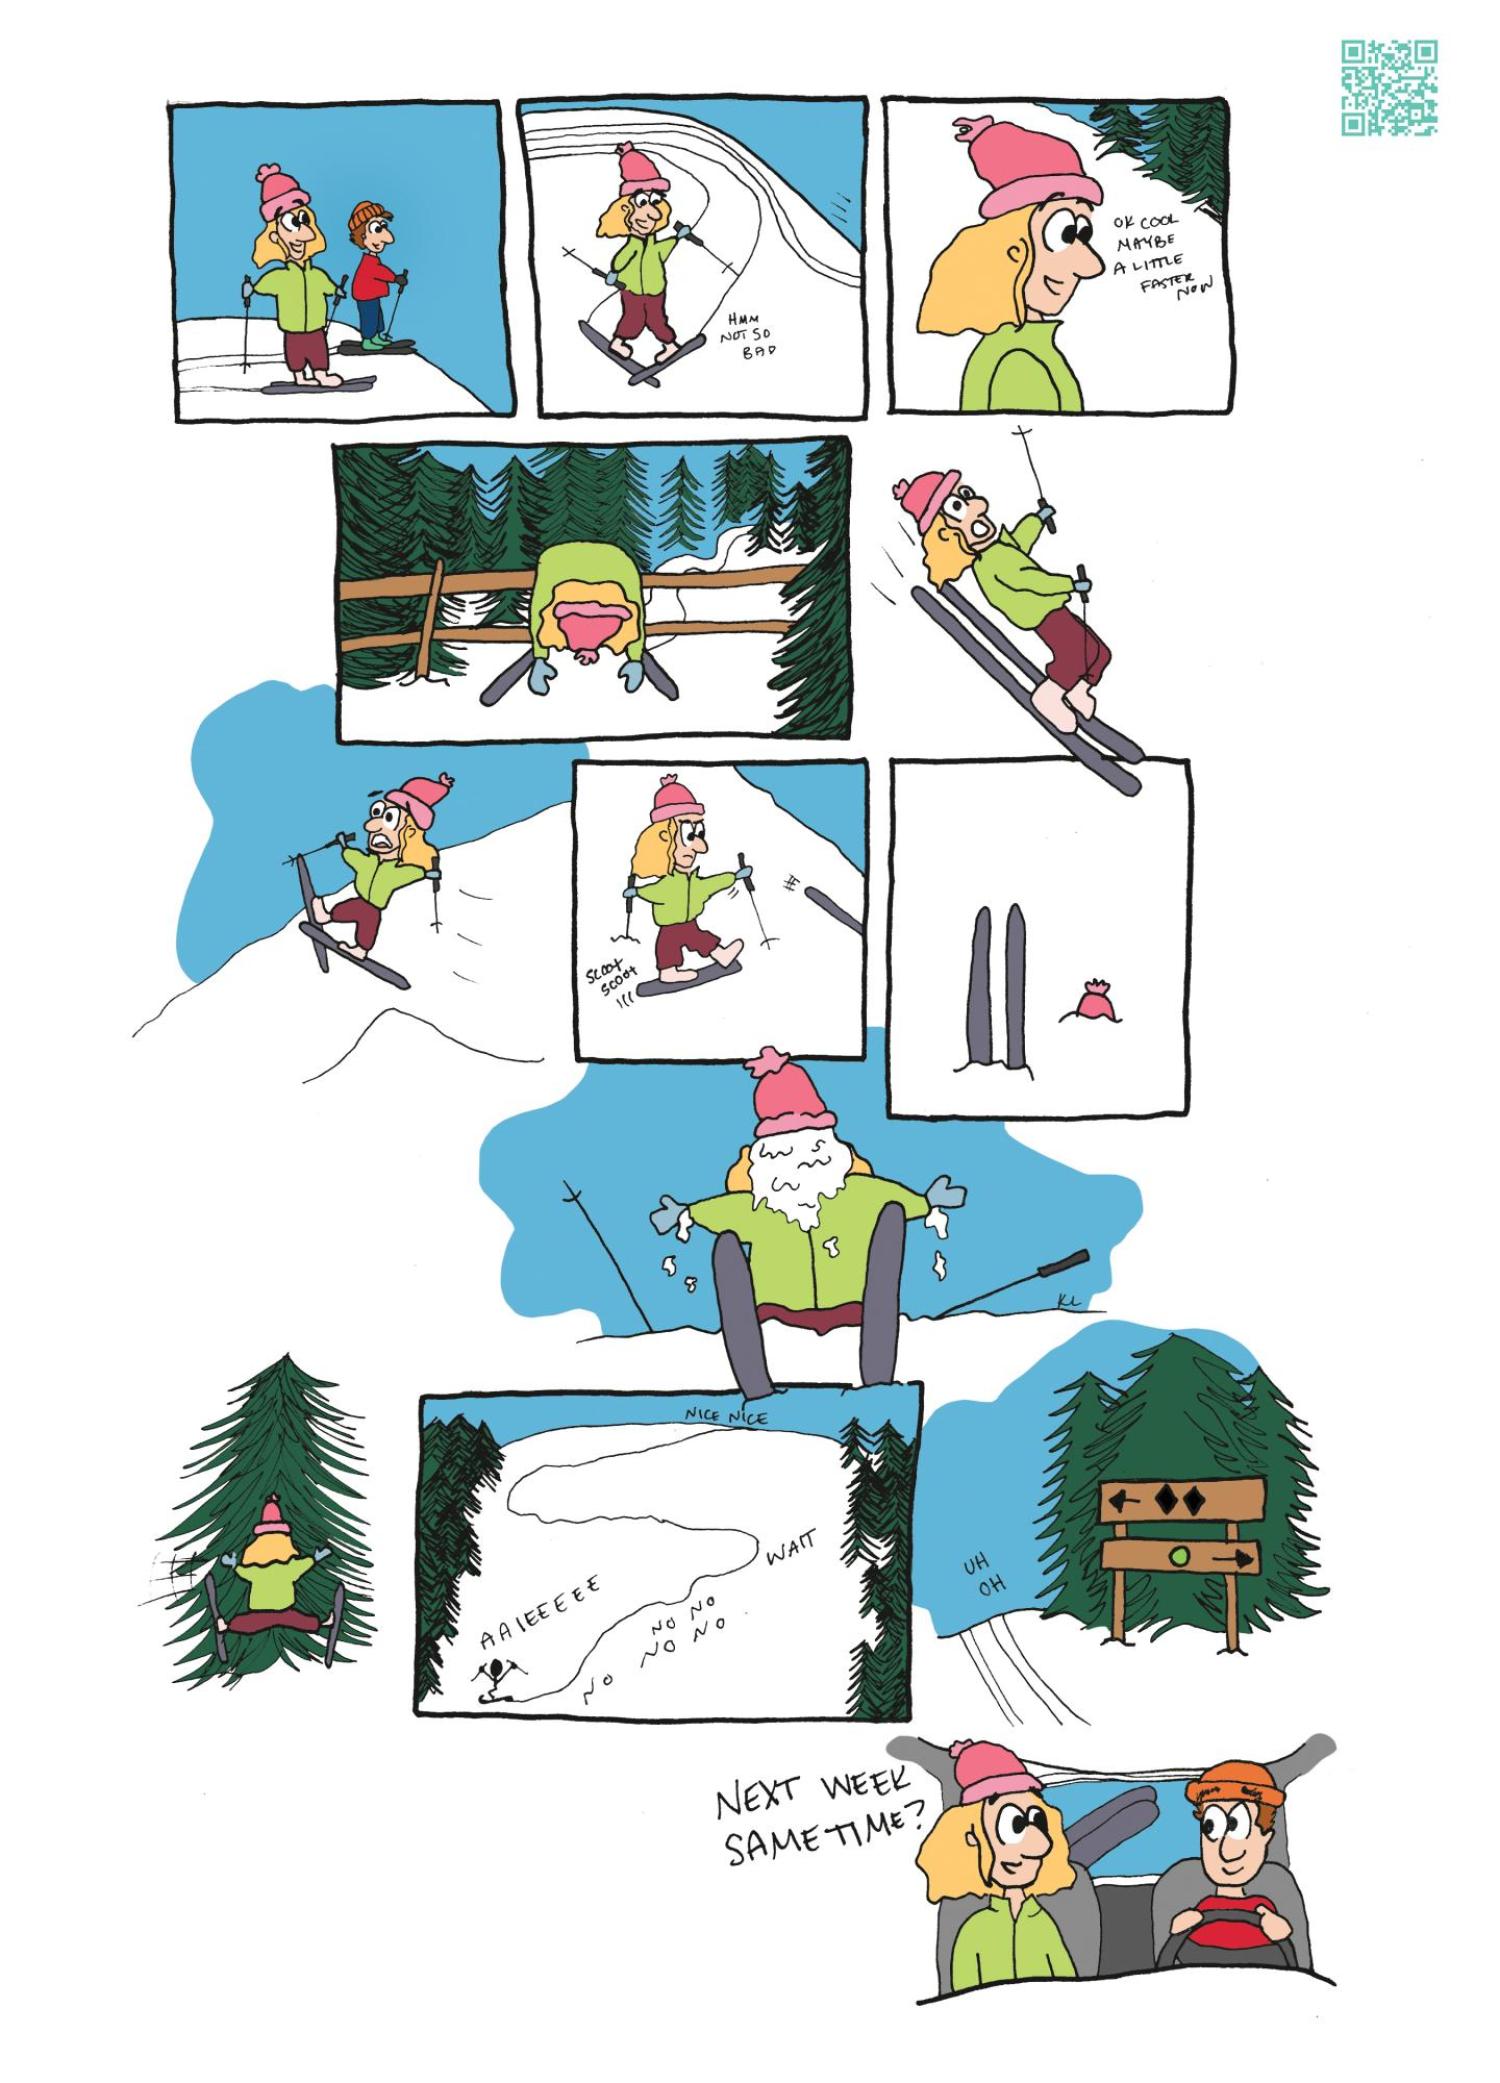 Comic strip of two people skiing